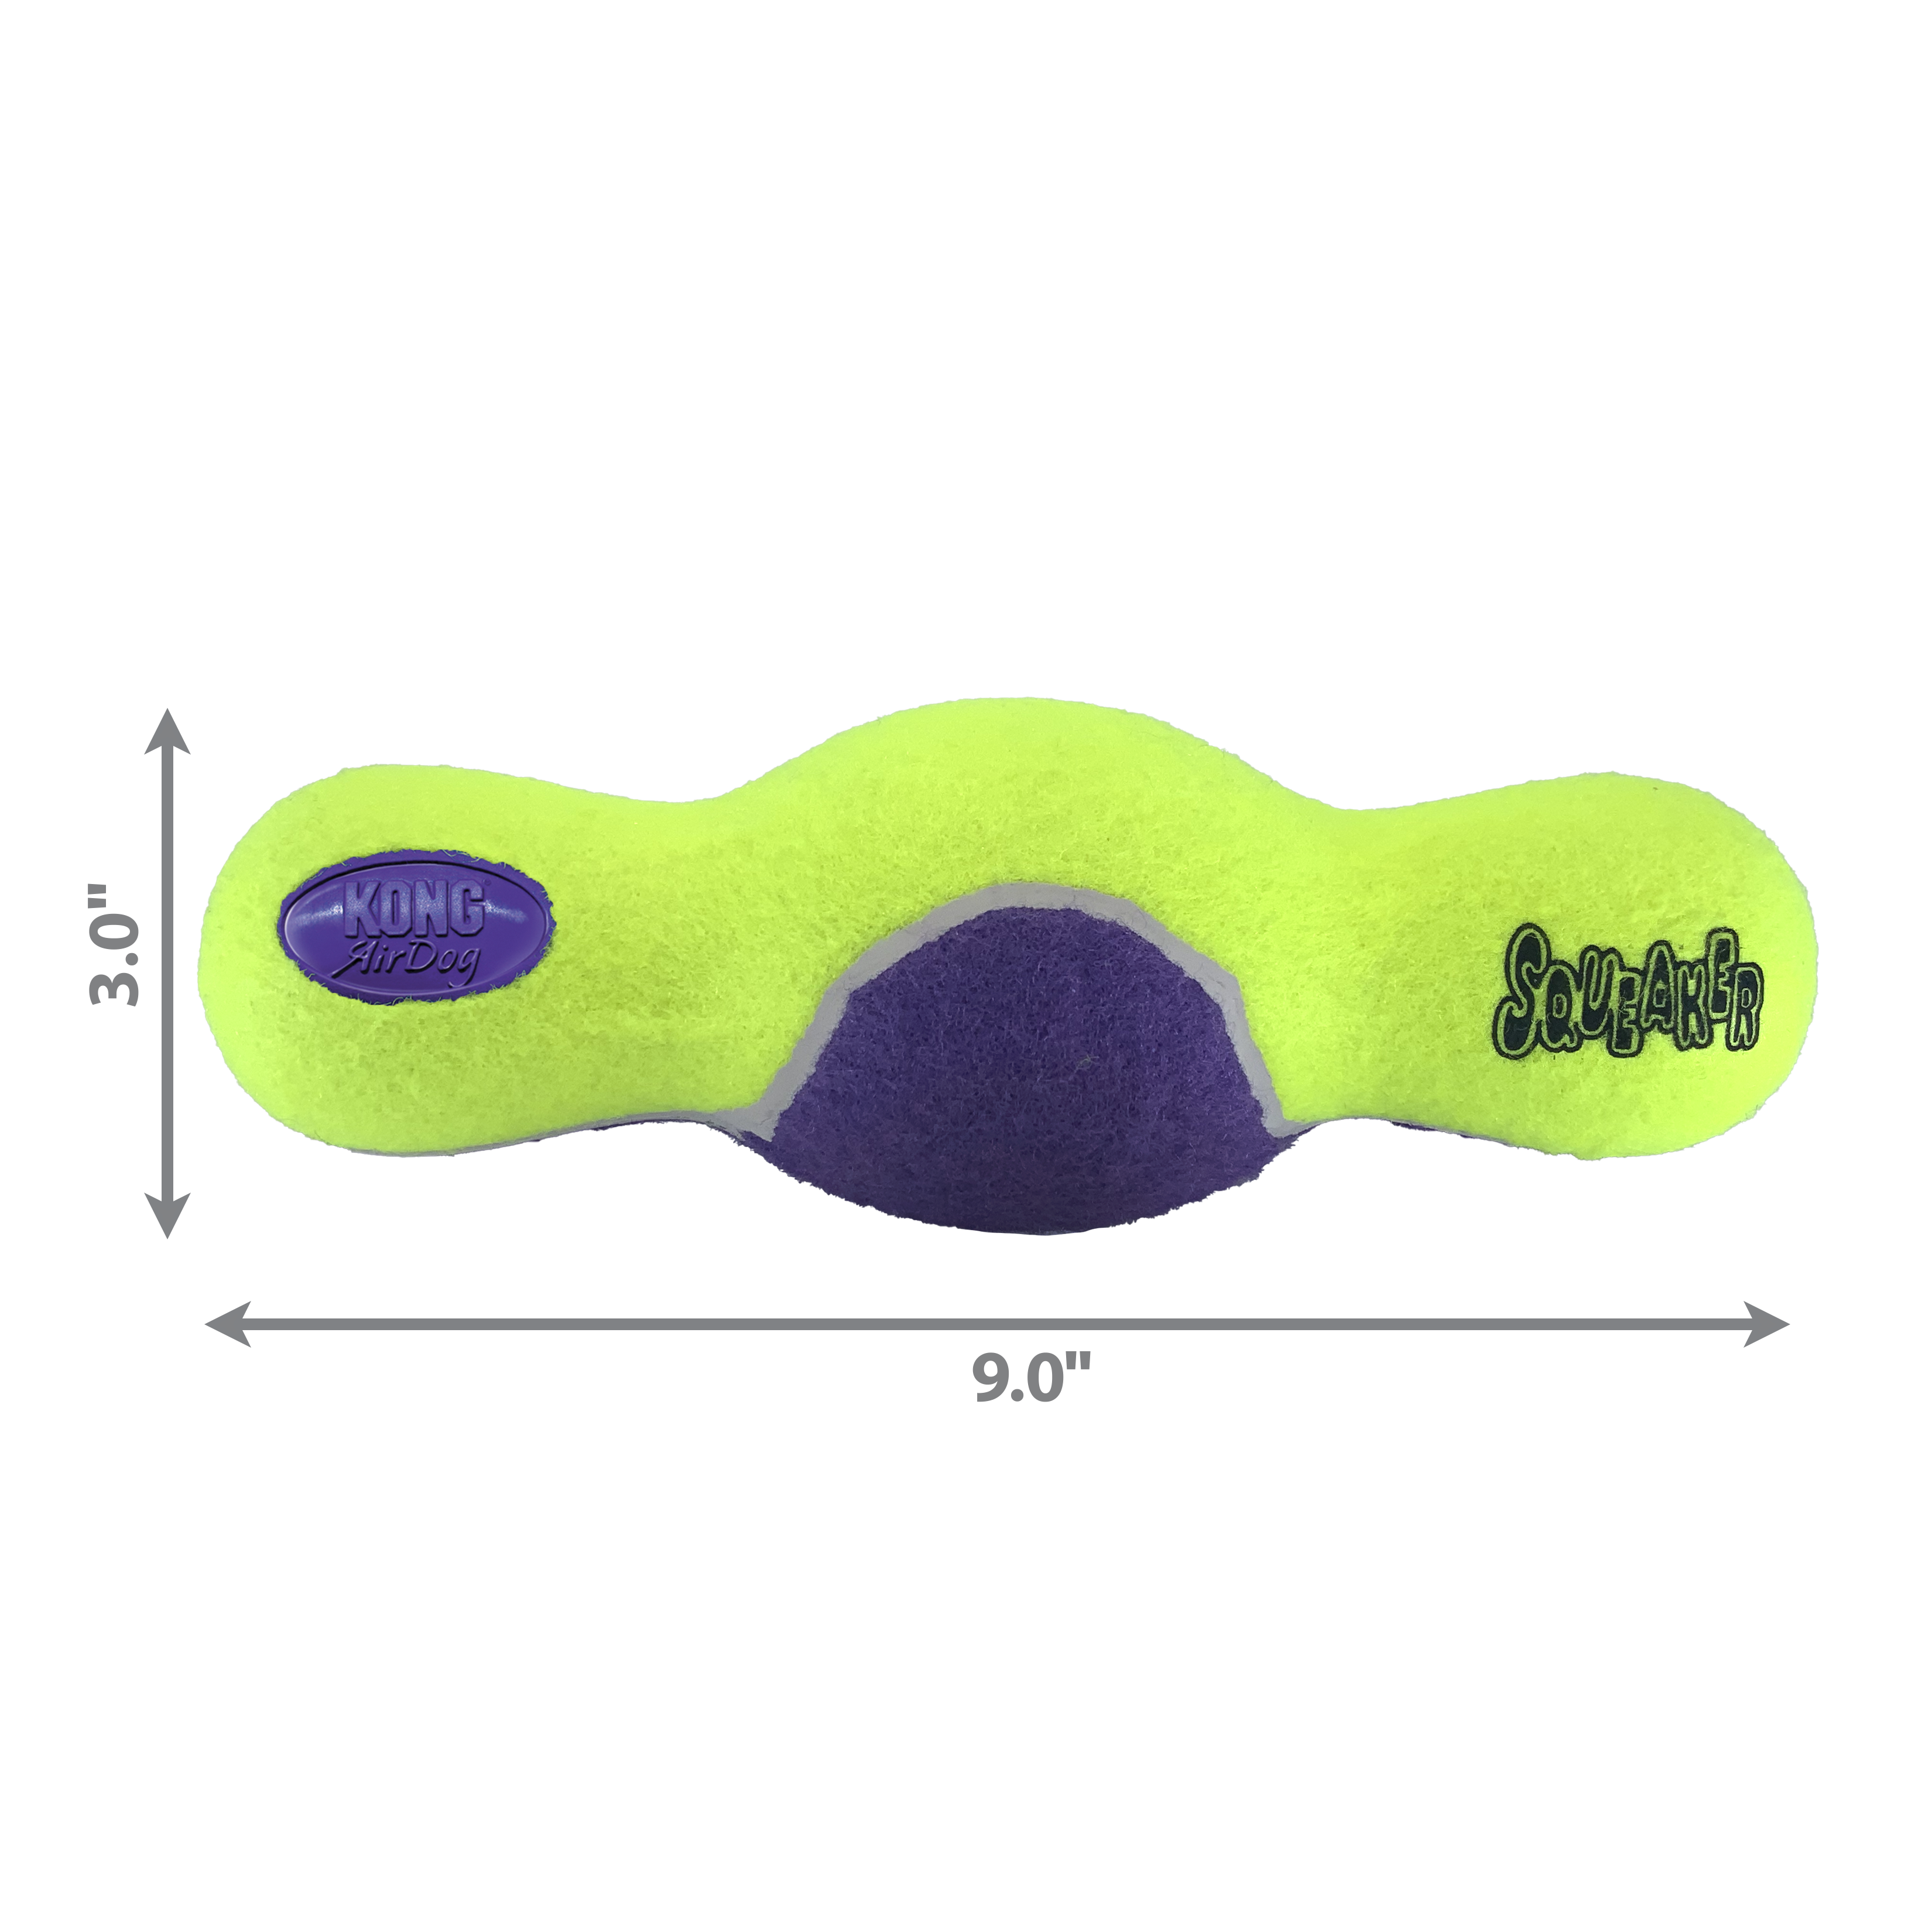 AirDog Squeaker Roller dimoffpack imagem do produto